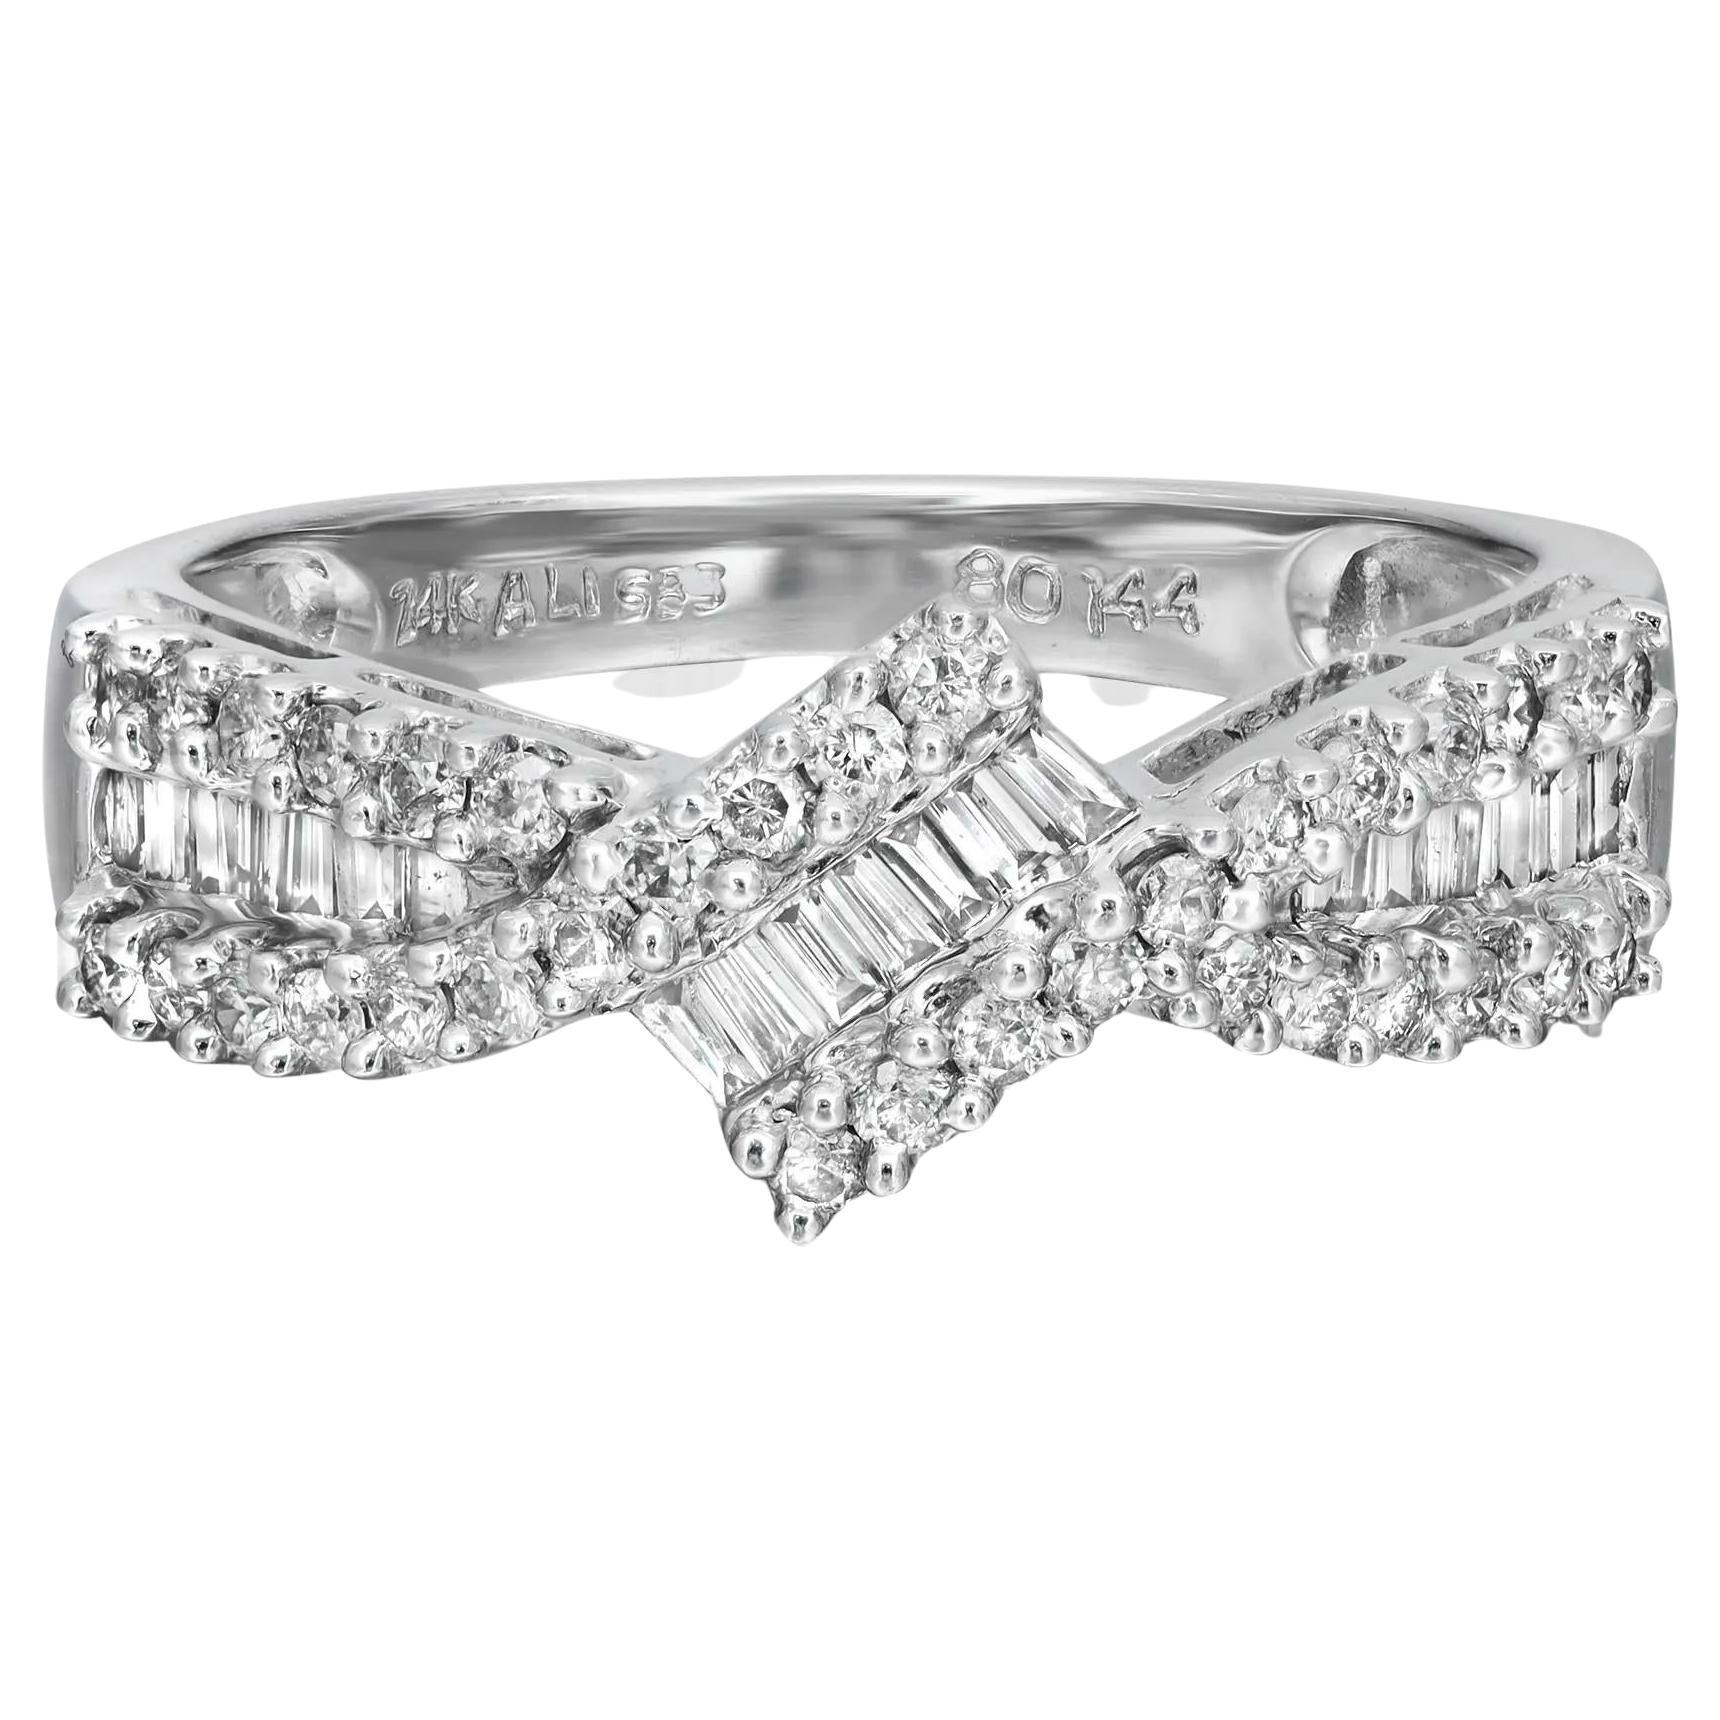 0.30Cttw Baguette & 0.35Cttw Round Diamond Ladies Ring 14K White Gold Size 7.75